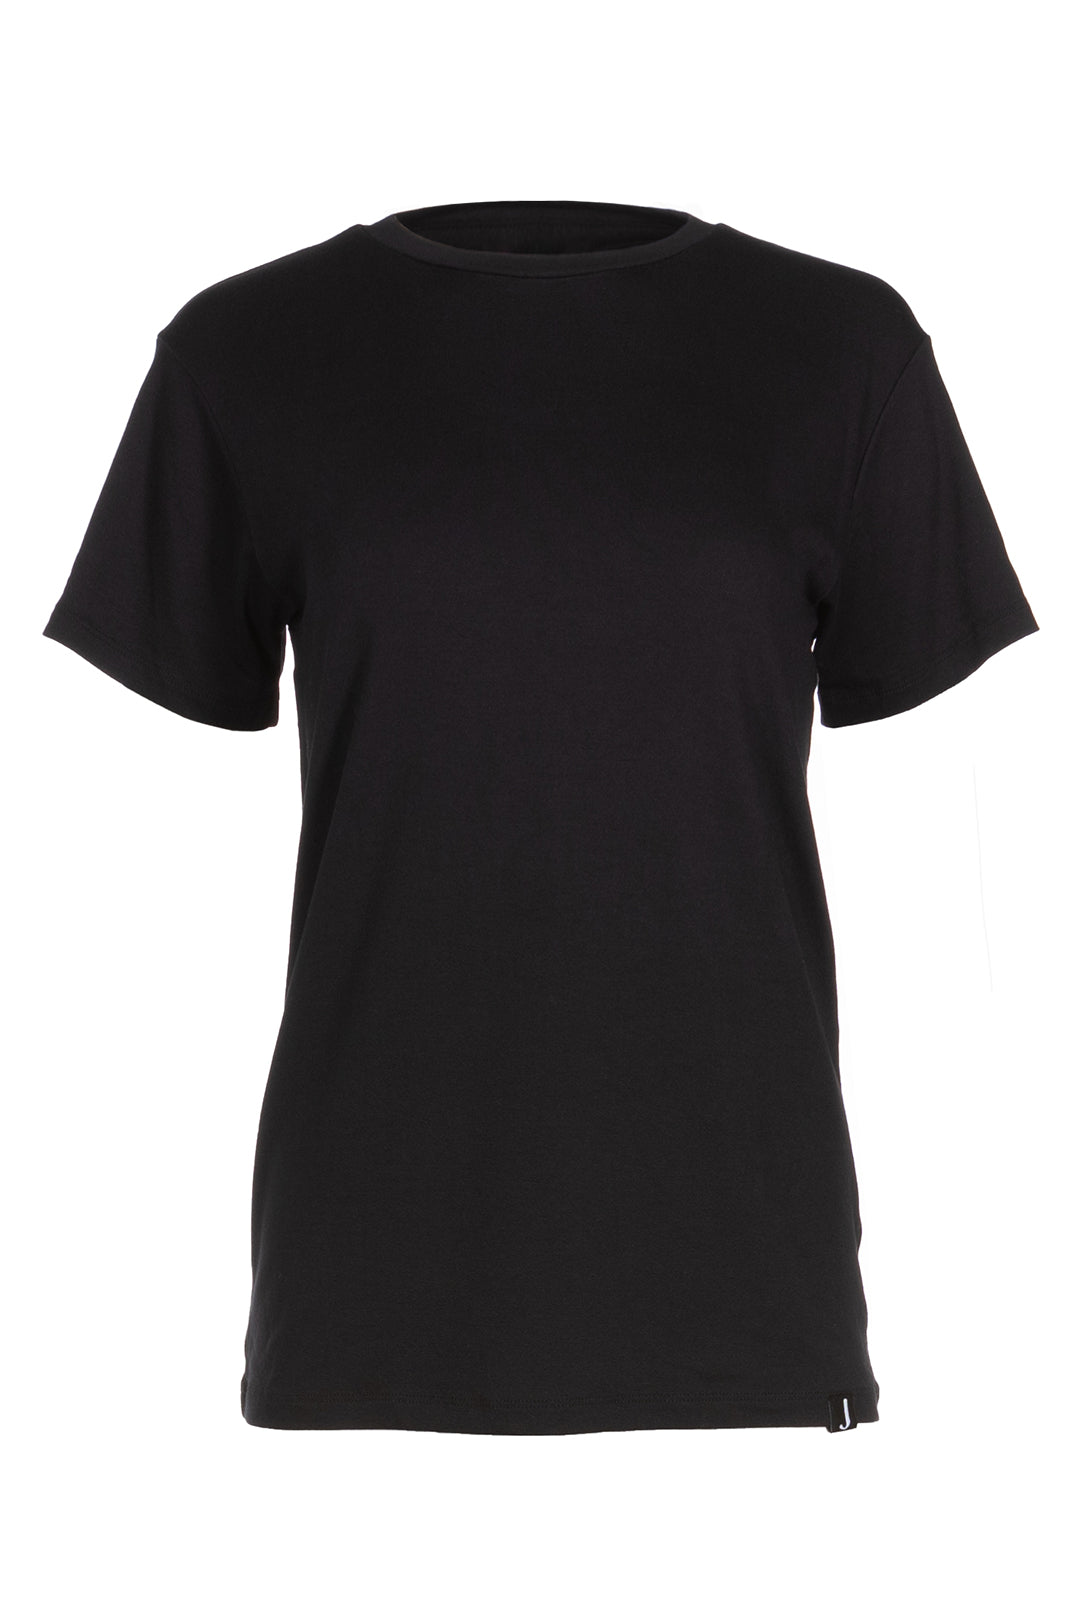 T-shirt noir encolure ronde | Samie